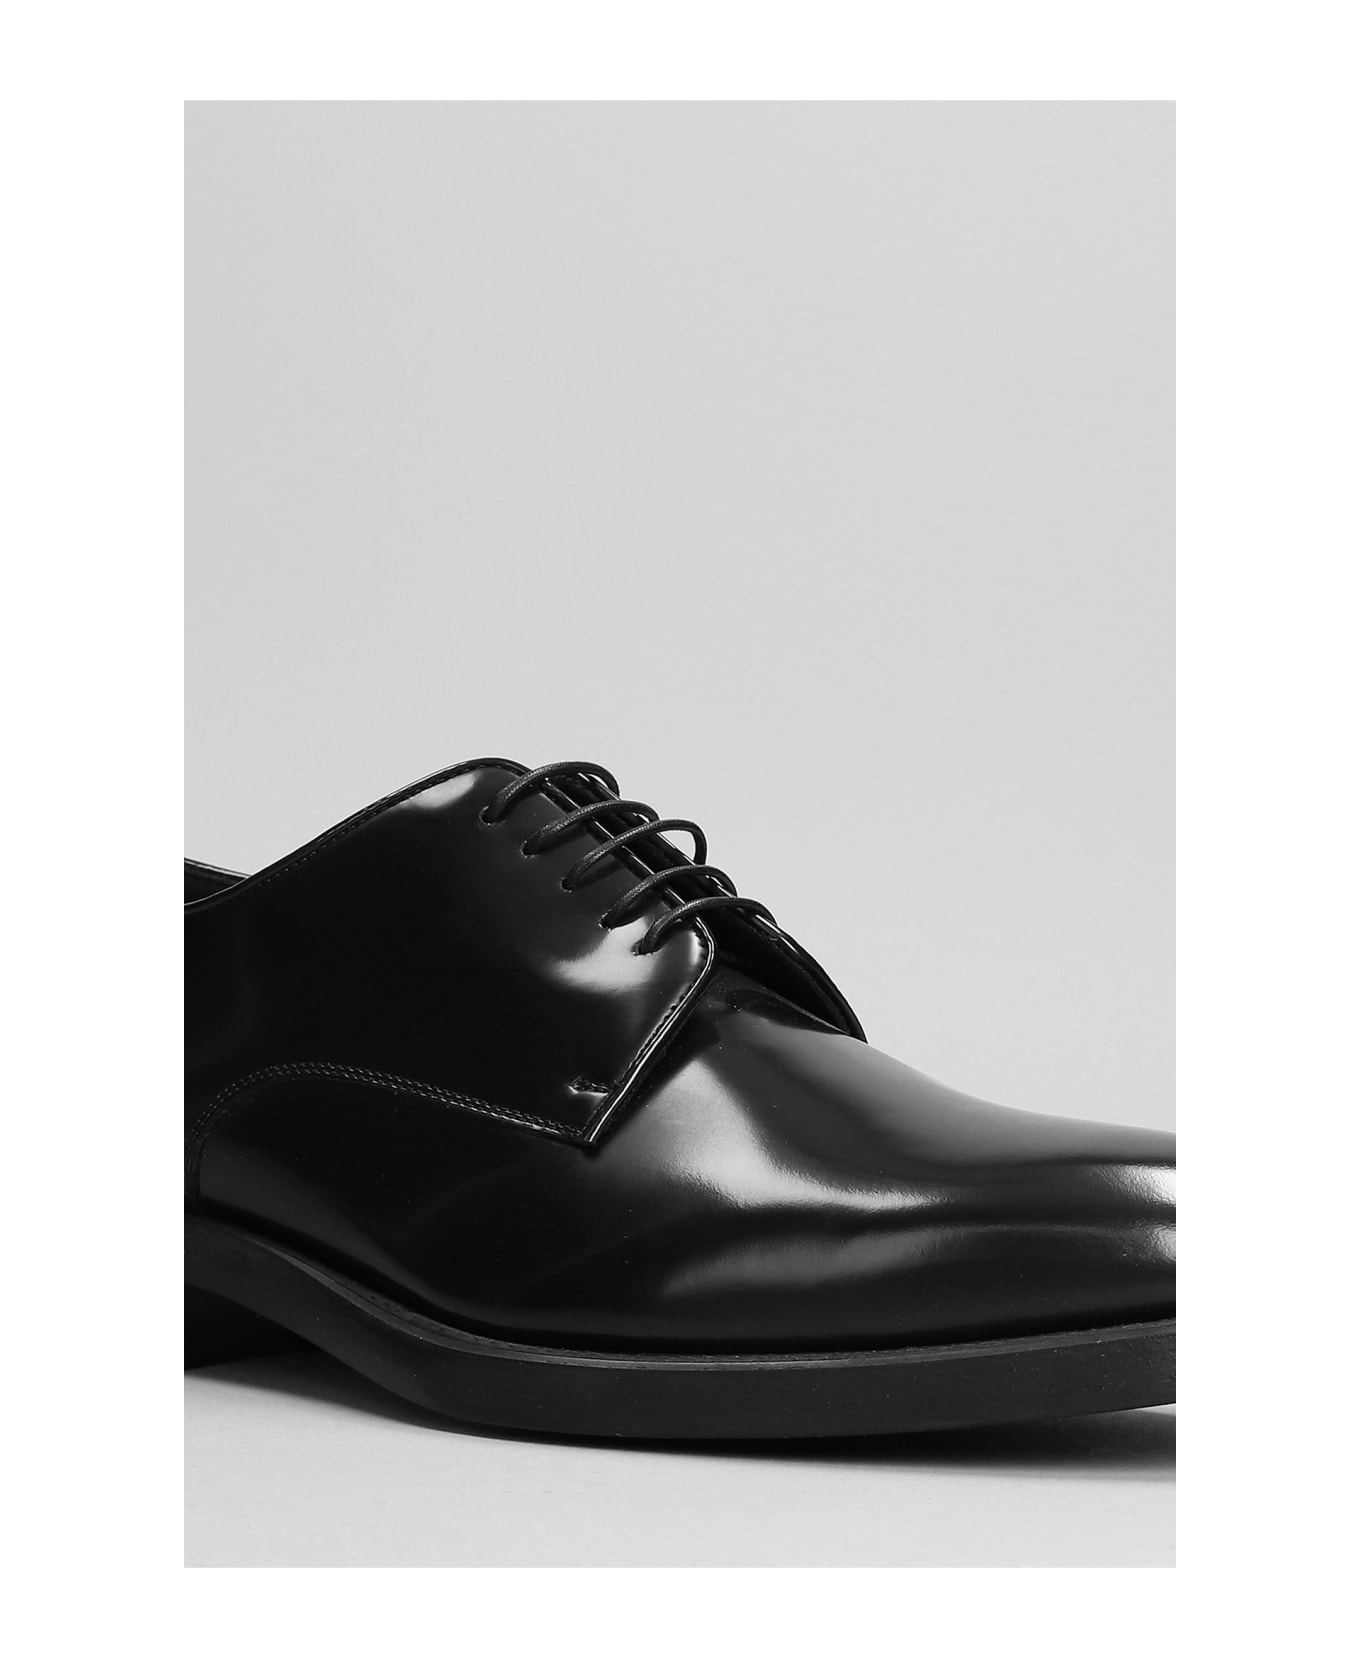 Giorgio Armani Lace Up Shoes In Black Leather - black